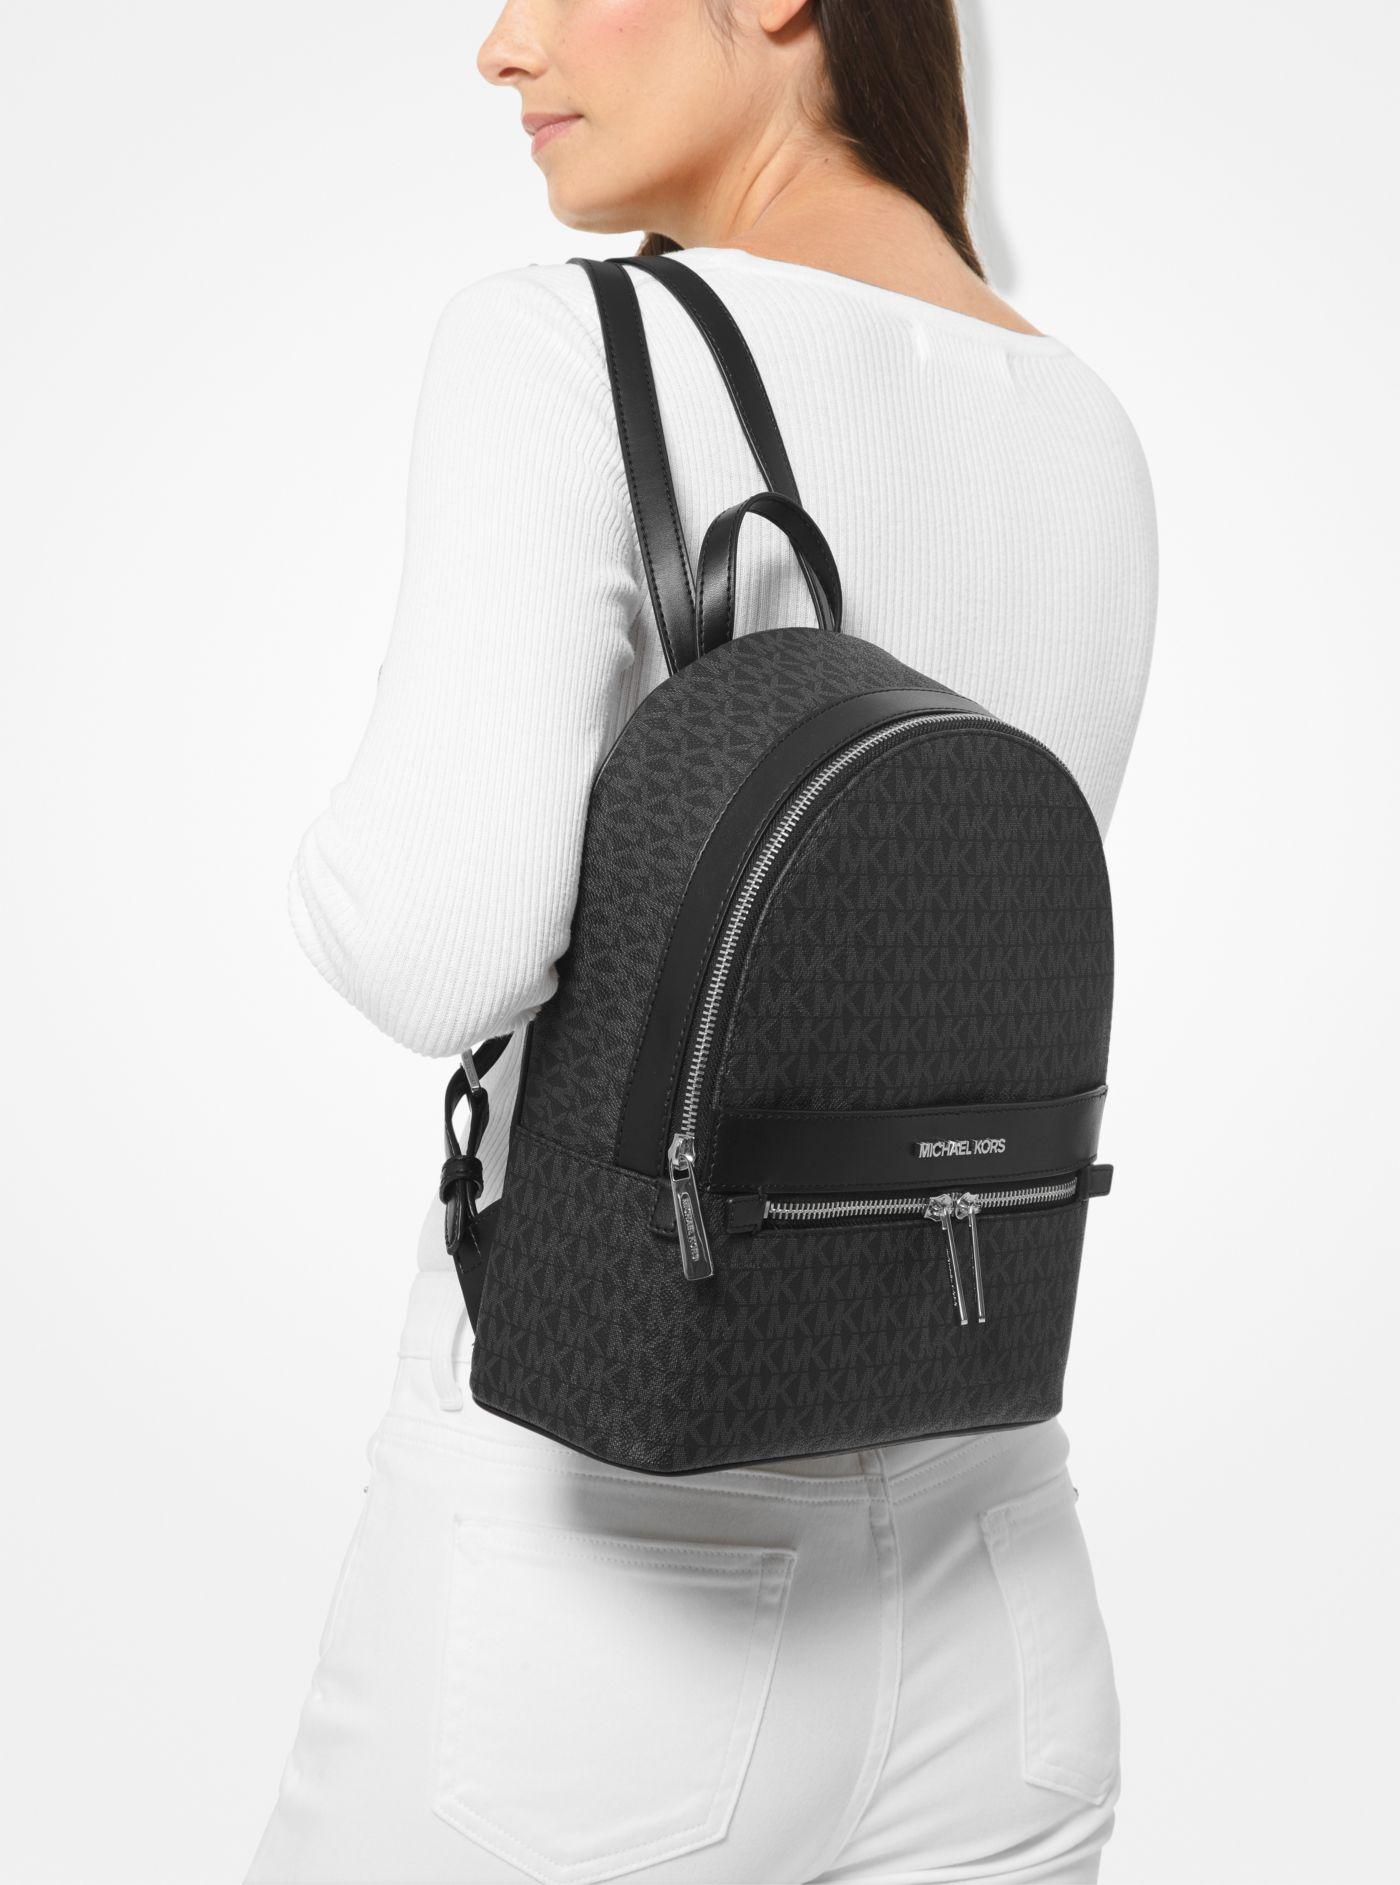 Michael Kors Kenly Medium Logo Backpack in Black - Lyst